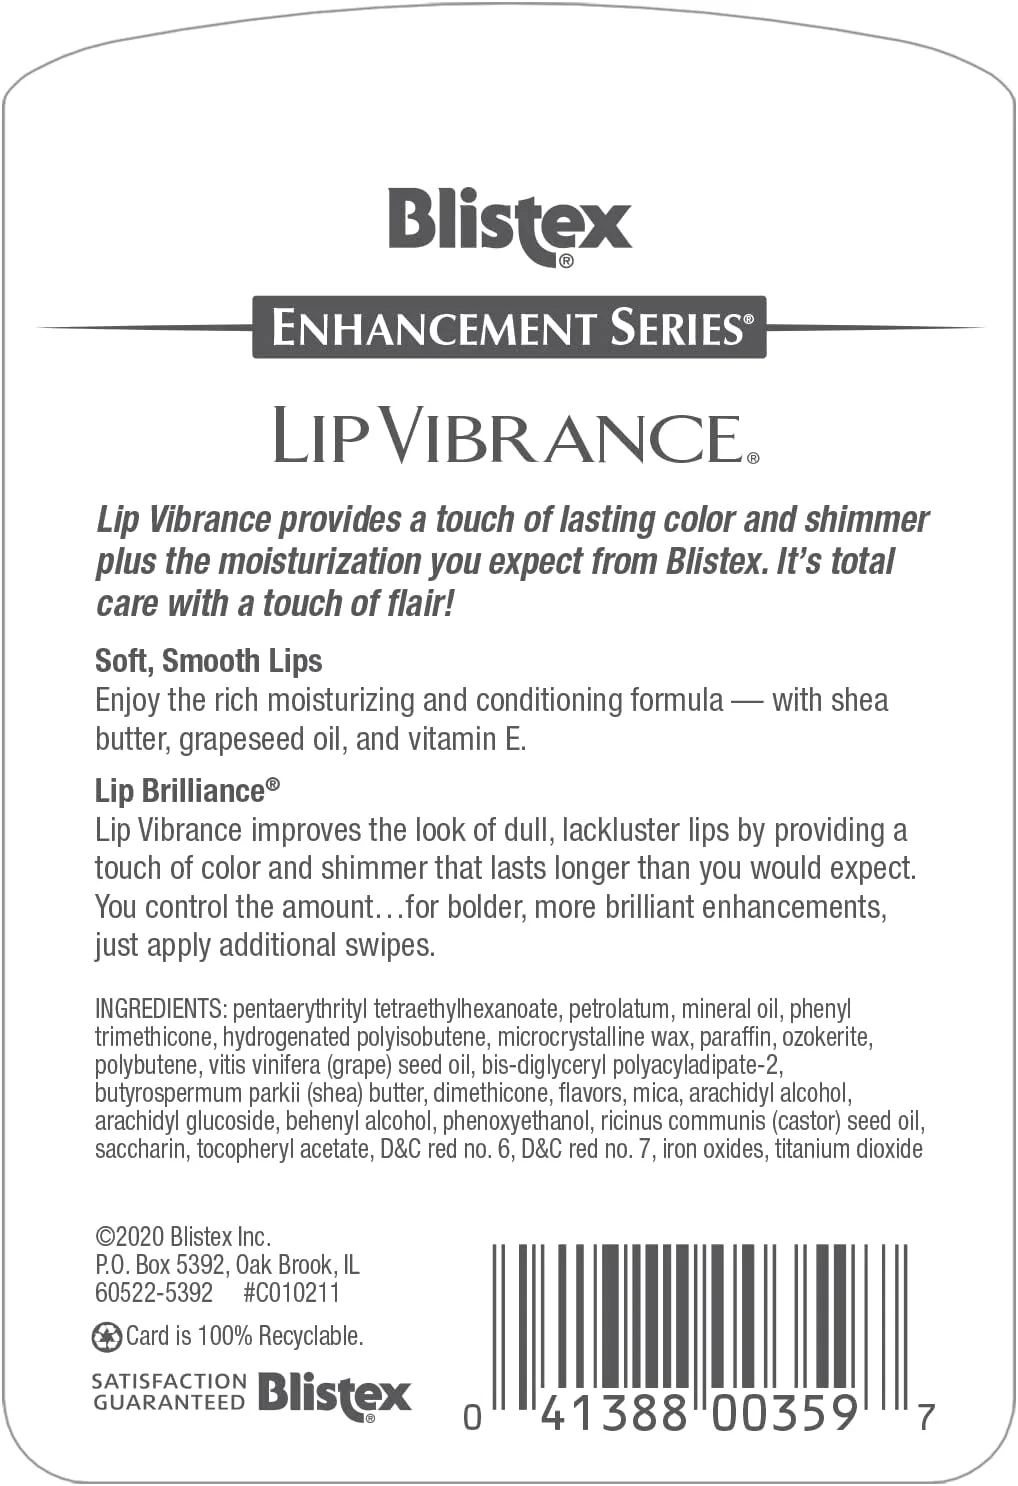 Blistex Lip Vibrance ingredients